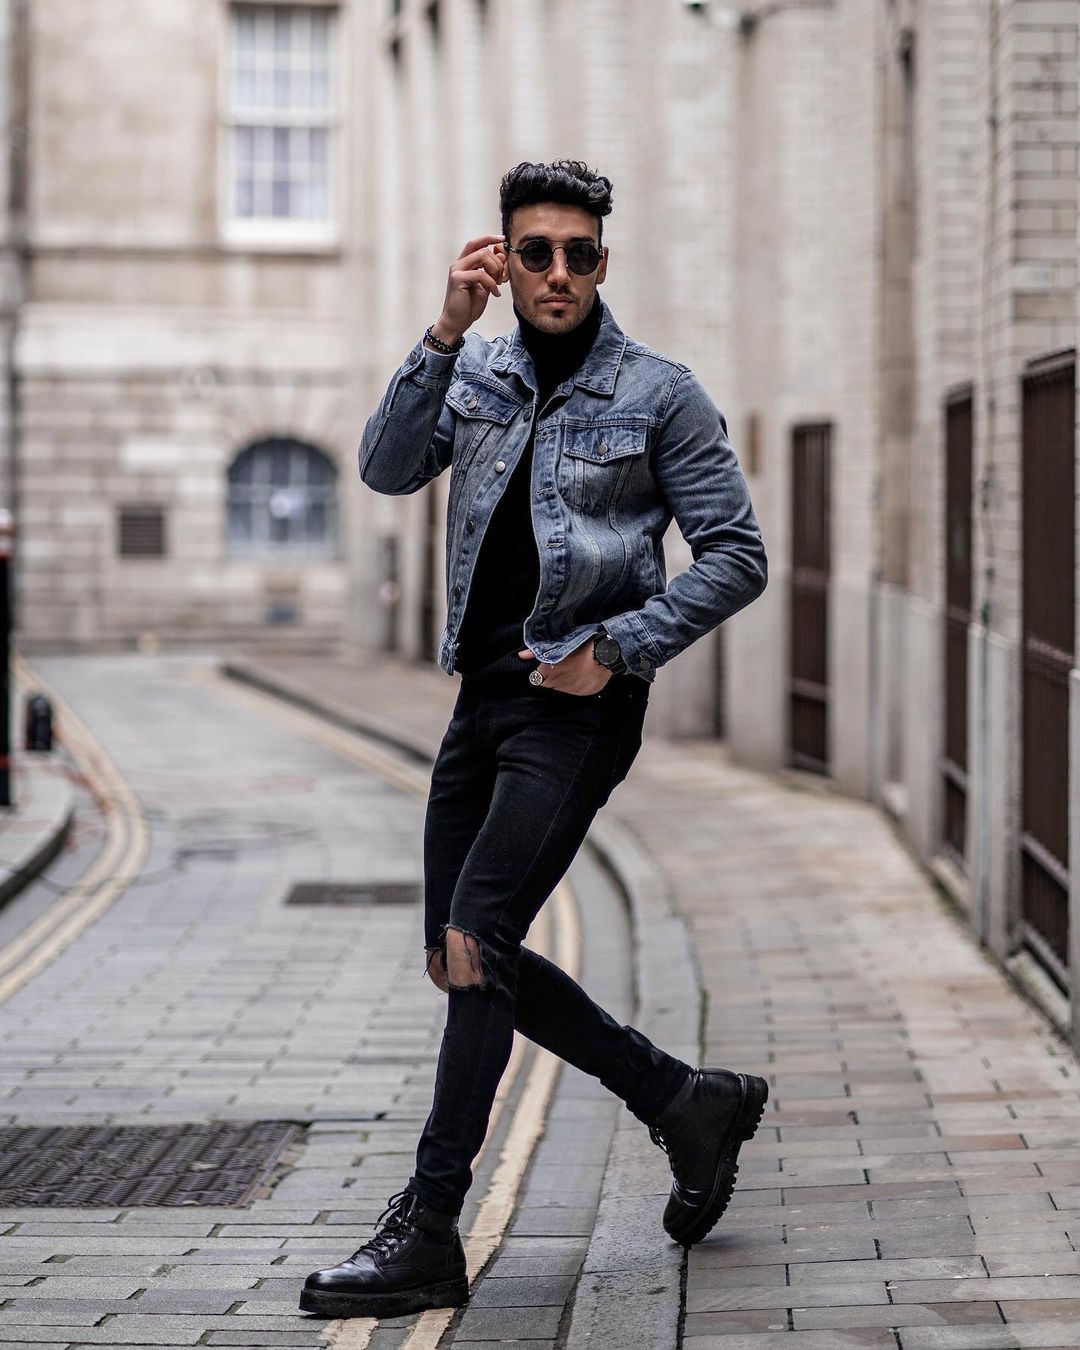 Jaqueta jeans masculina